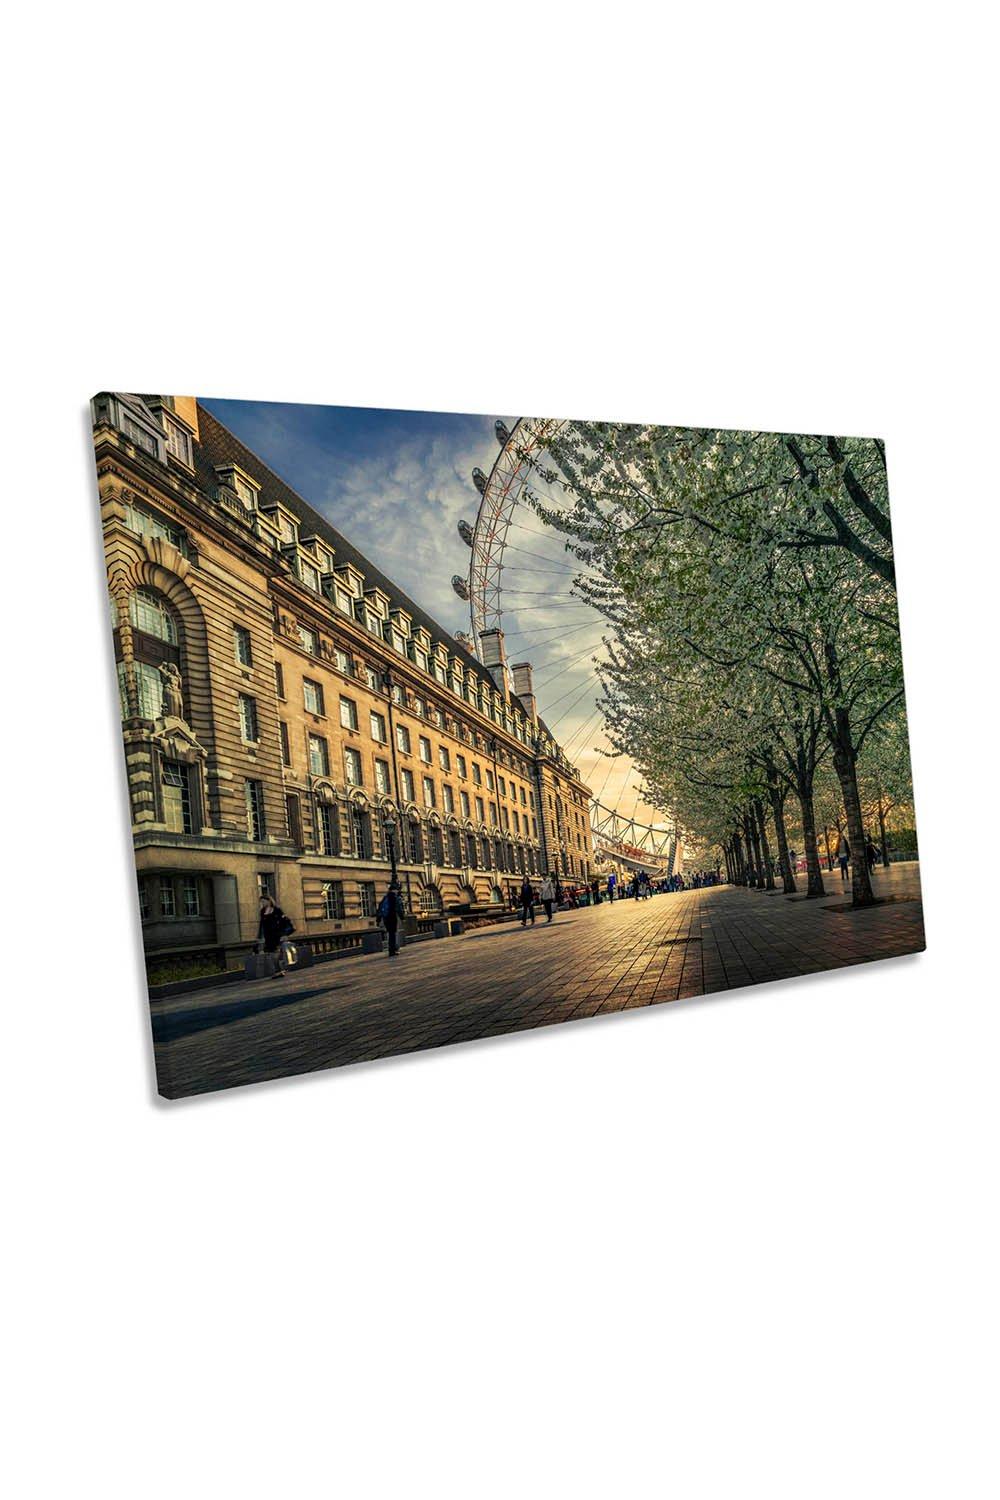 Last Daylight London Eye City Canvas Wall Art Picture Print